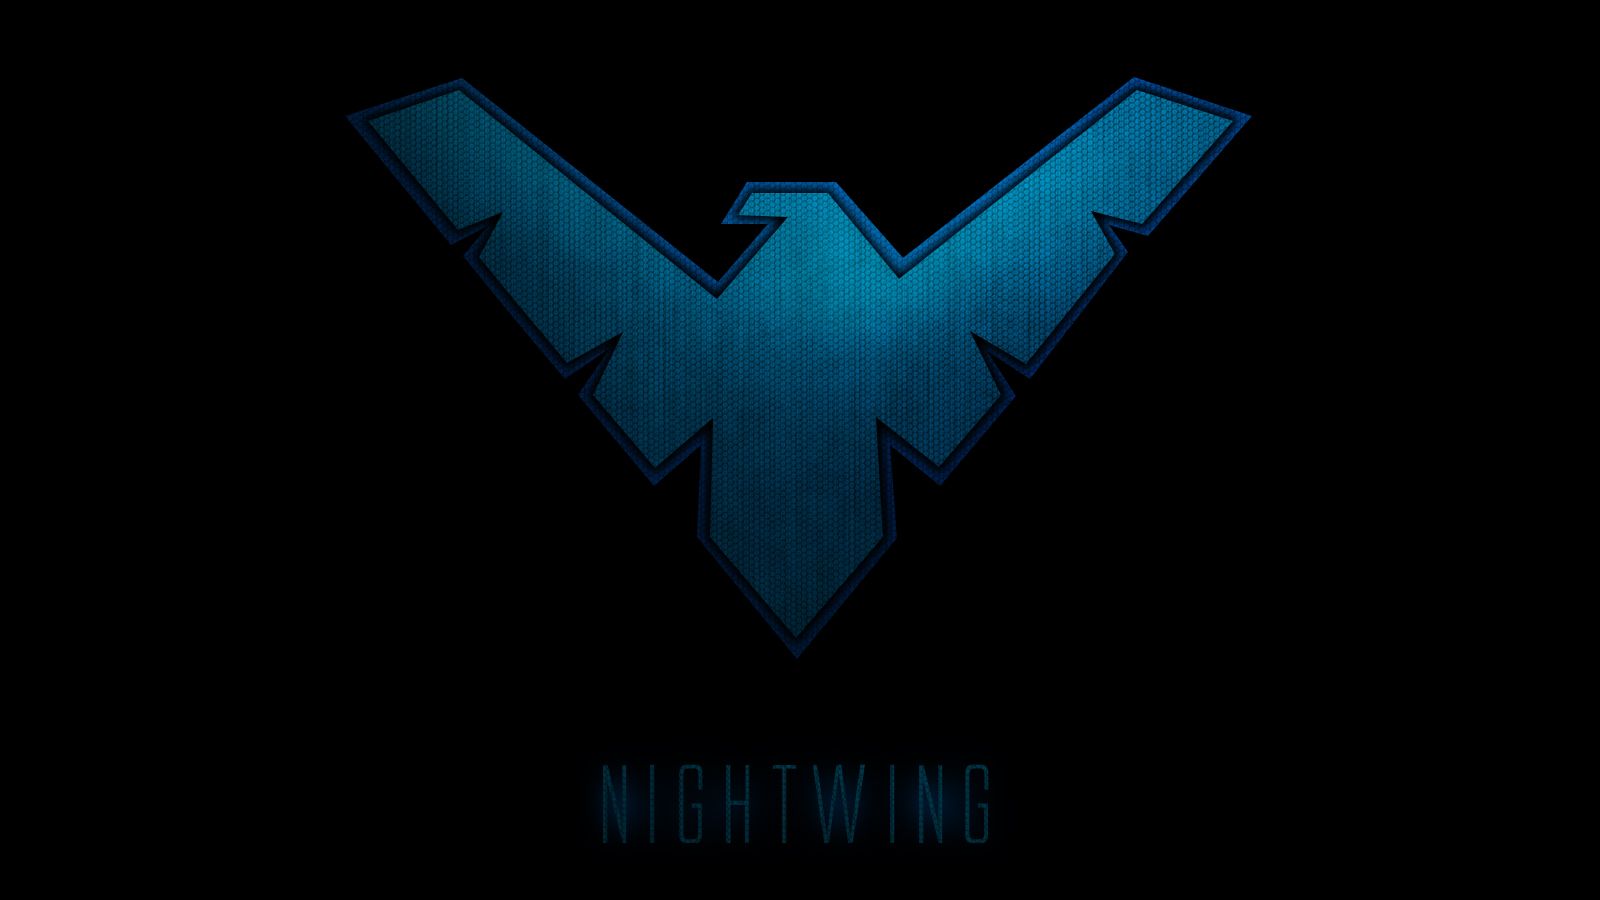 Nightwing iPhone Wallpaper